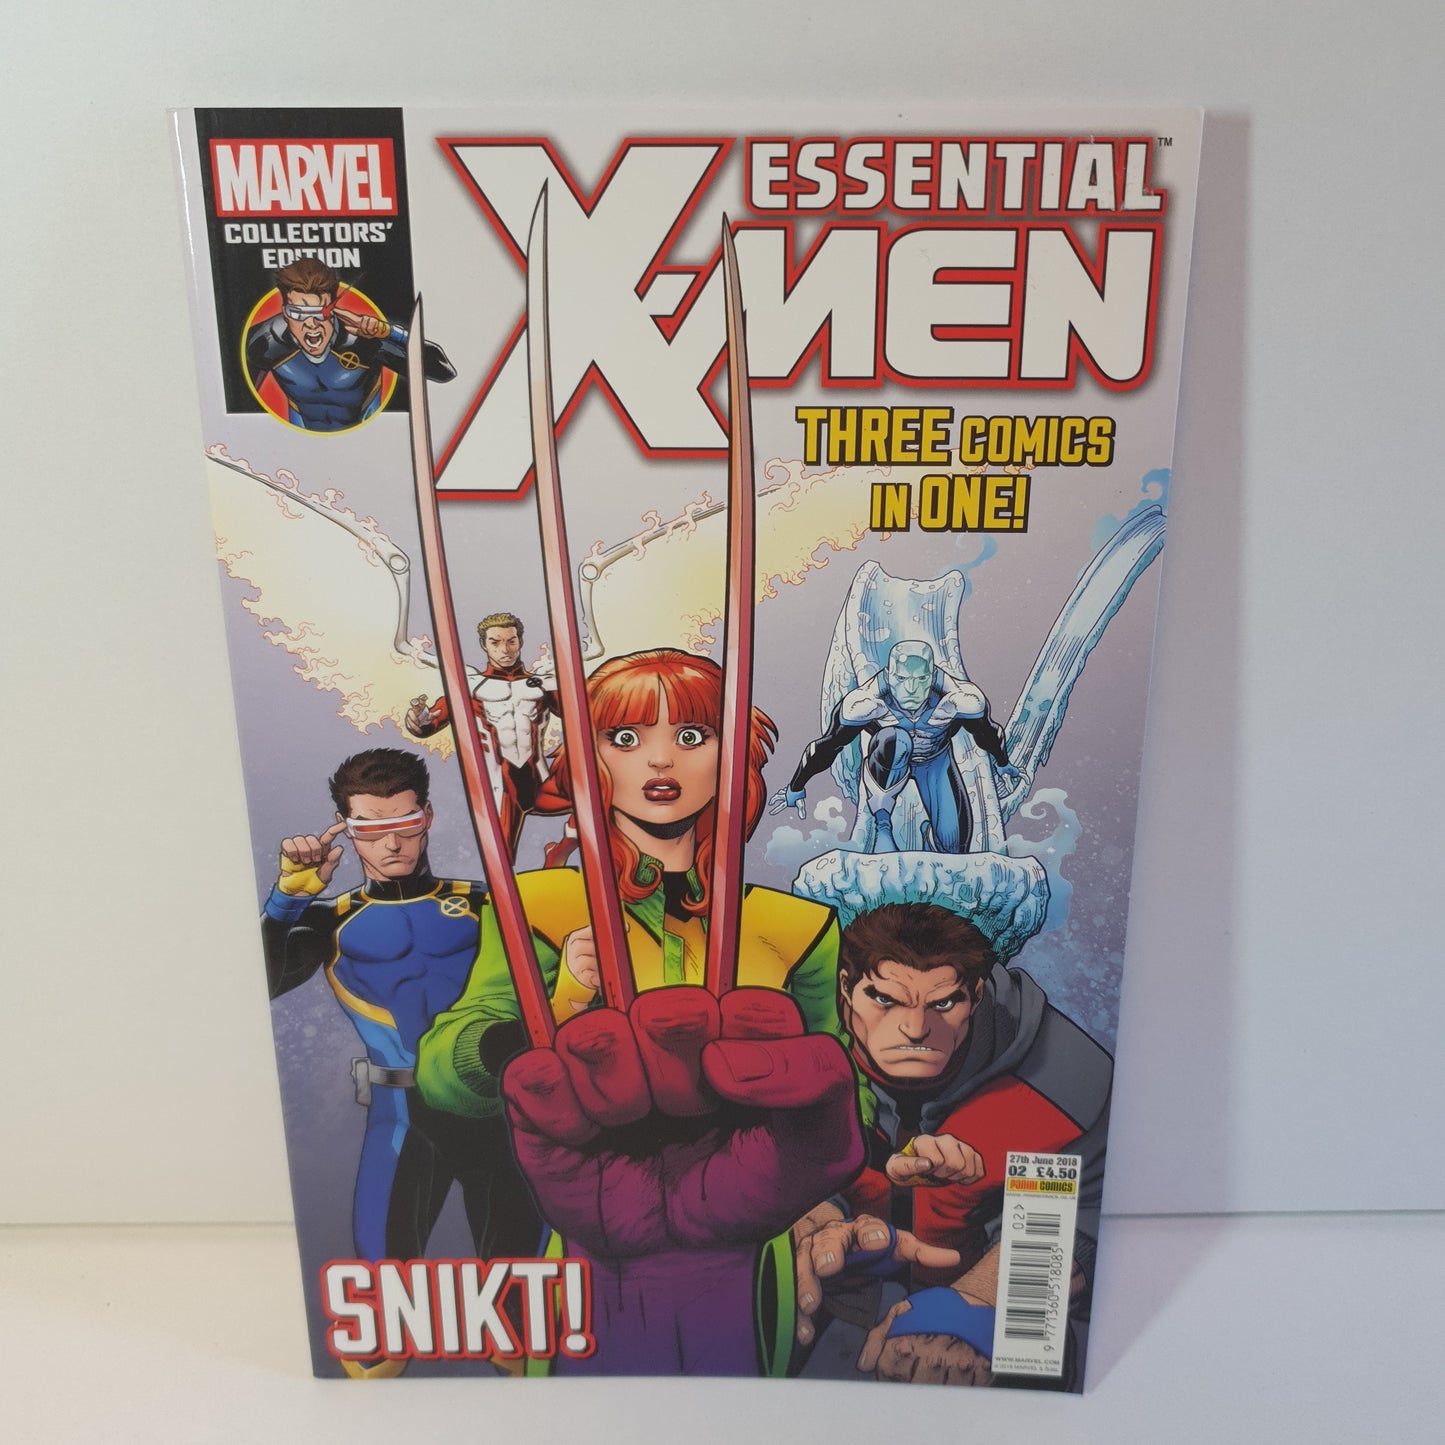 Essential X-Men Vol 5 #2 (27th June 2018)